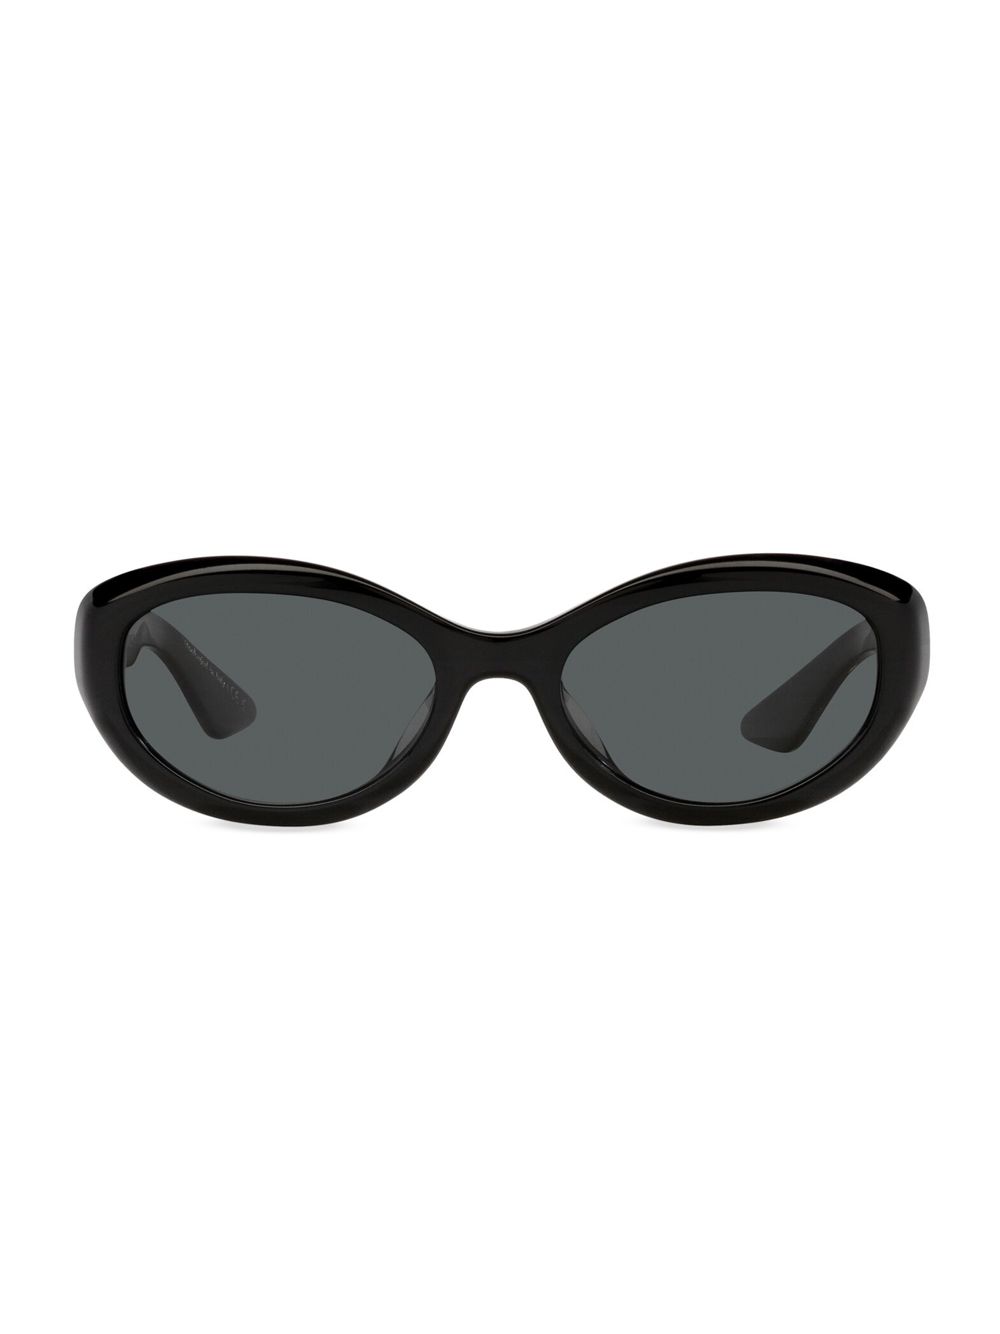 Овальные солнцезащитные очки Oliver Peoples 53MM KHAITE x Oliver Peoples, черный солнцезащитные очки oliver peoples x khaite rectangular черный